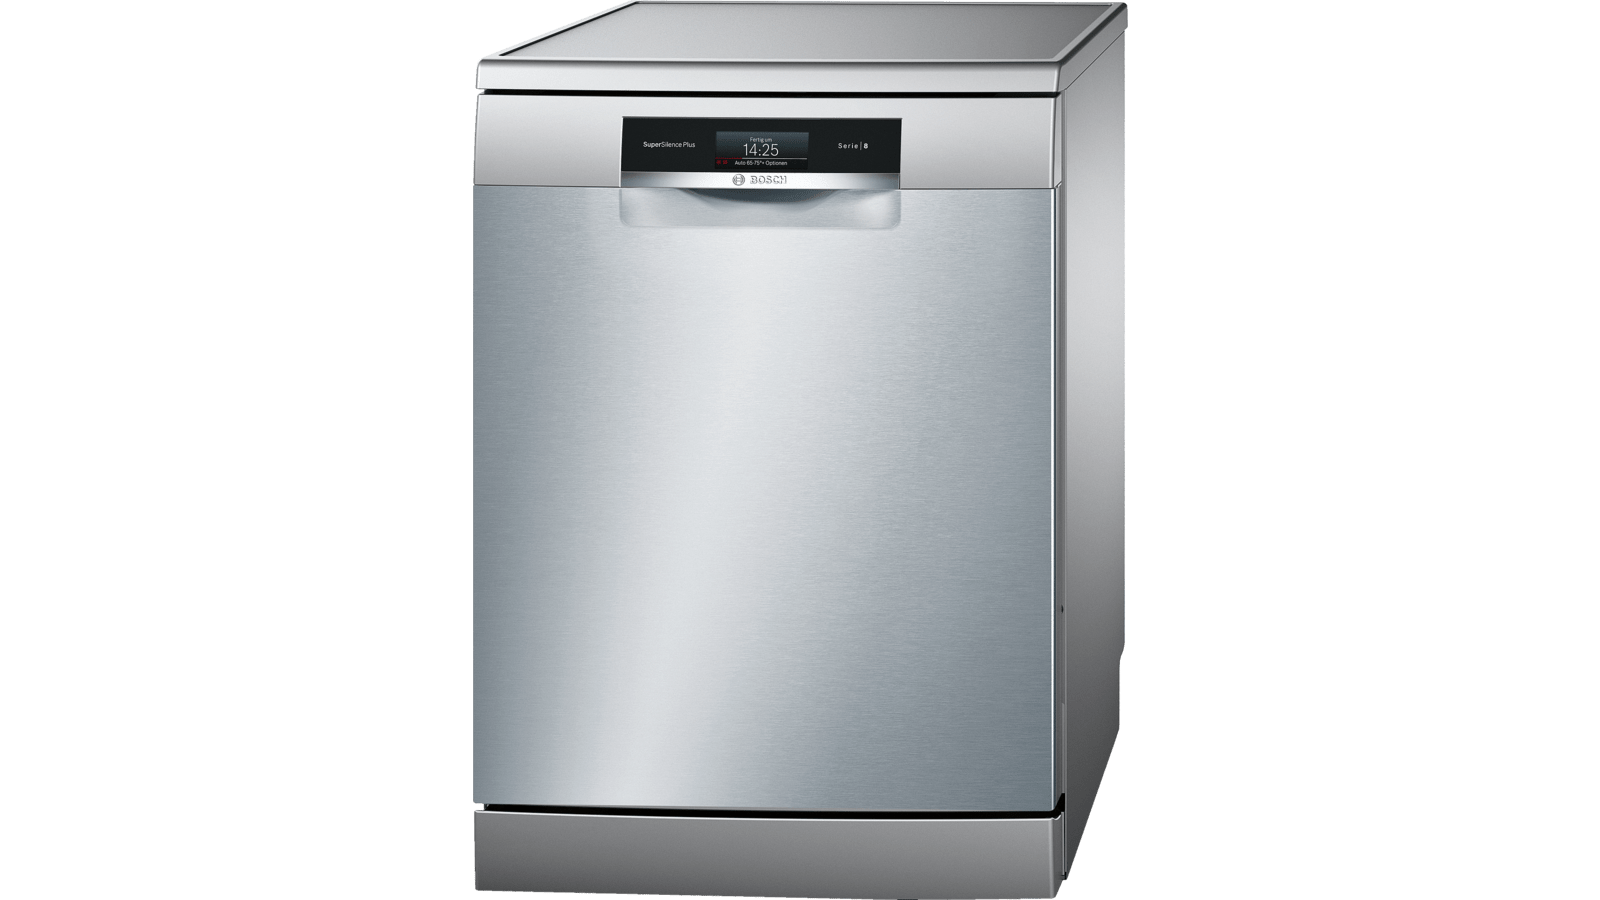 Bosch Sms88ti01e Free Standing Dishwasher